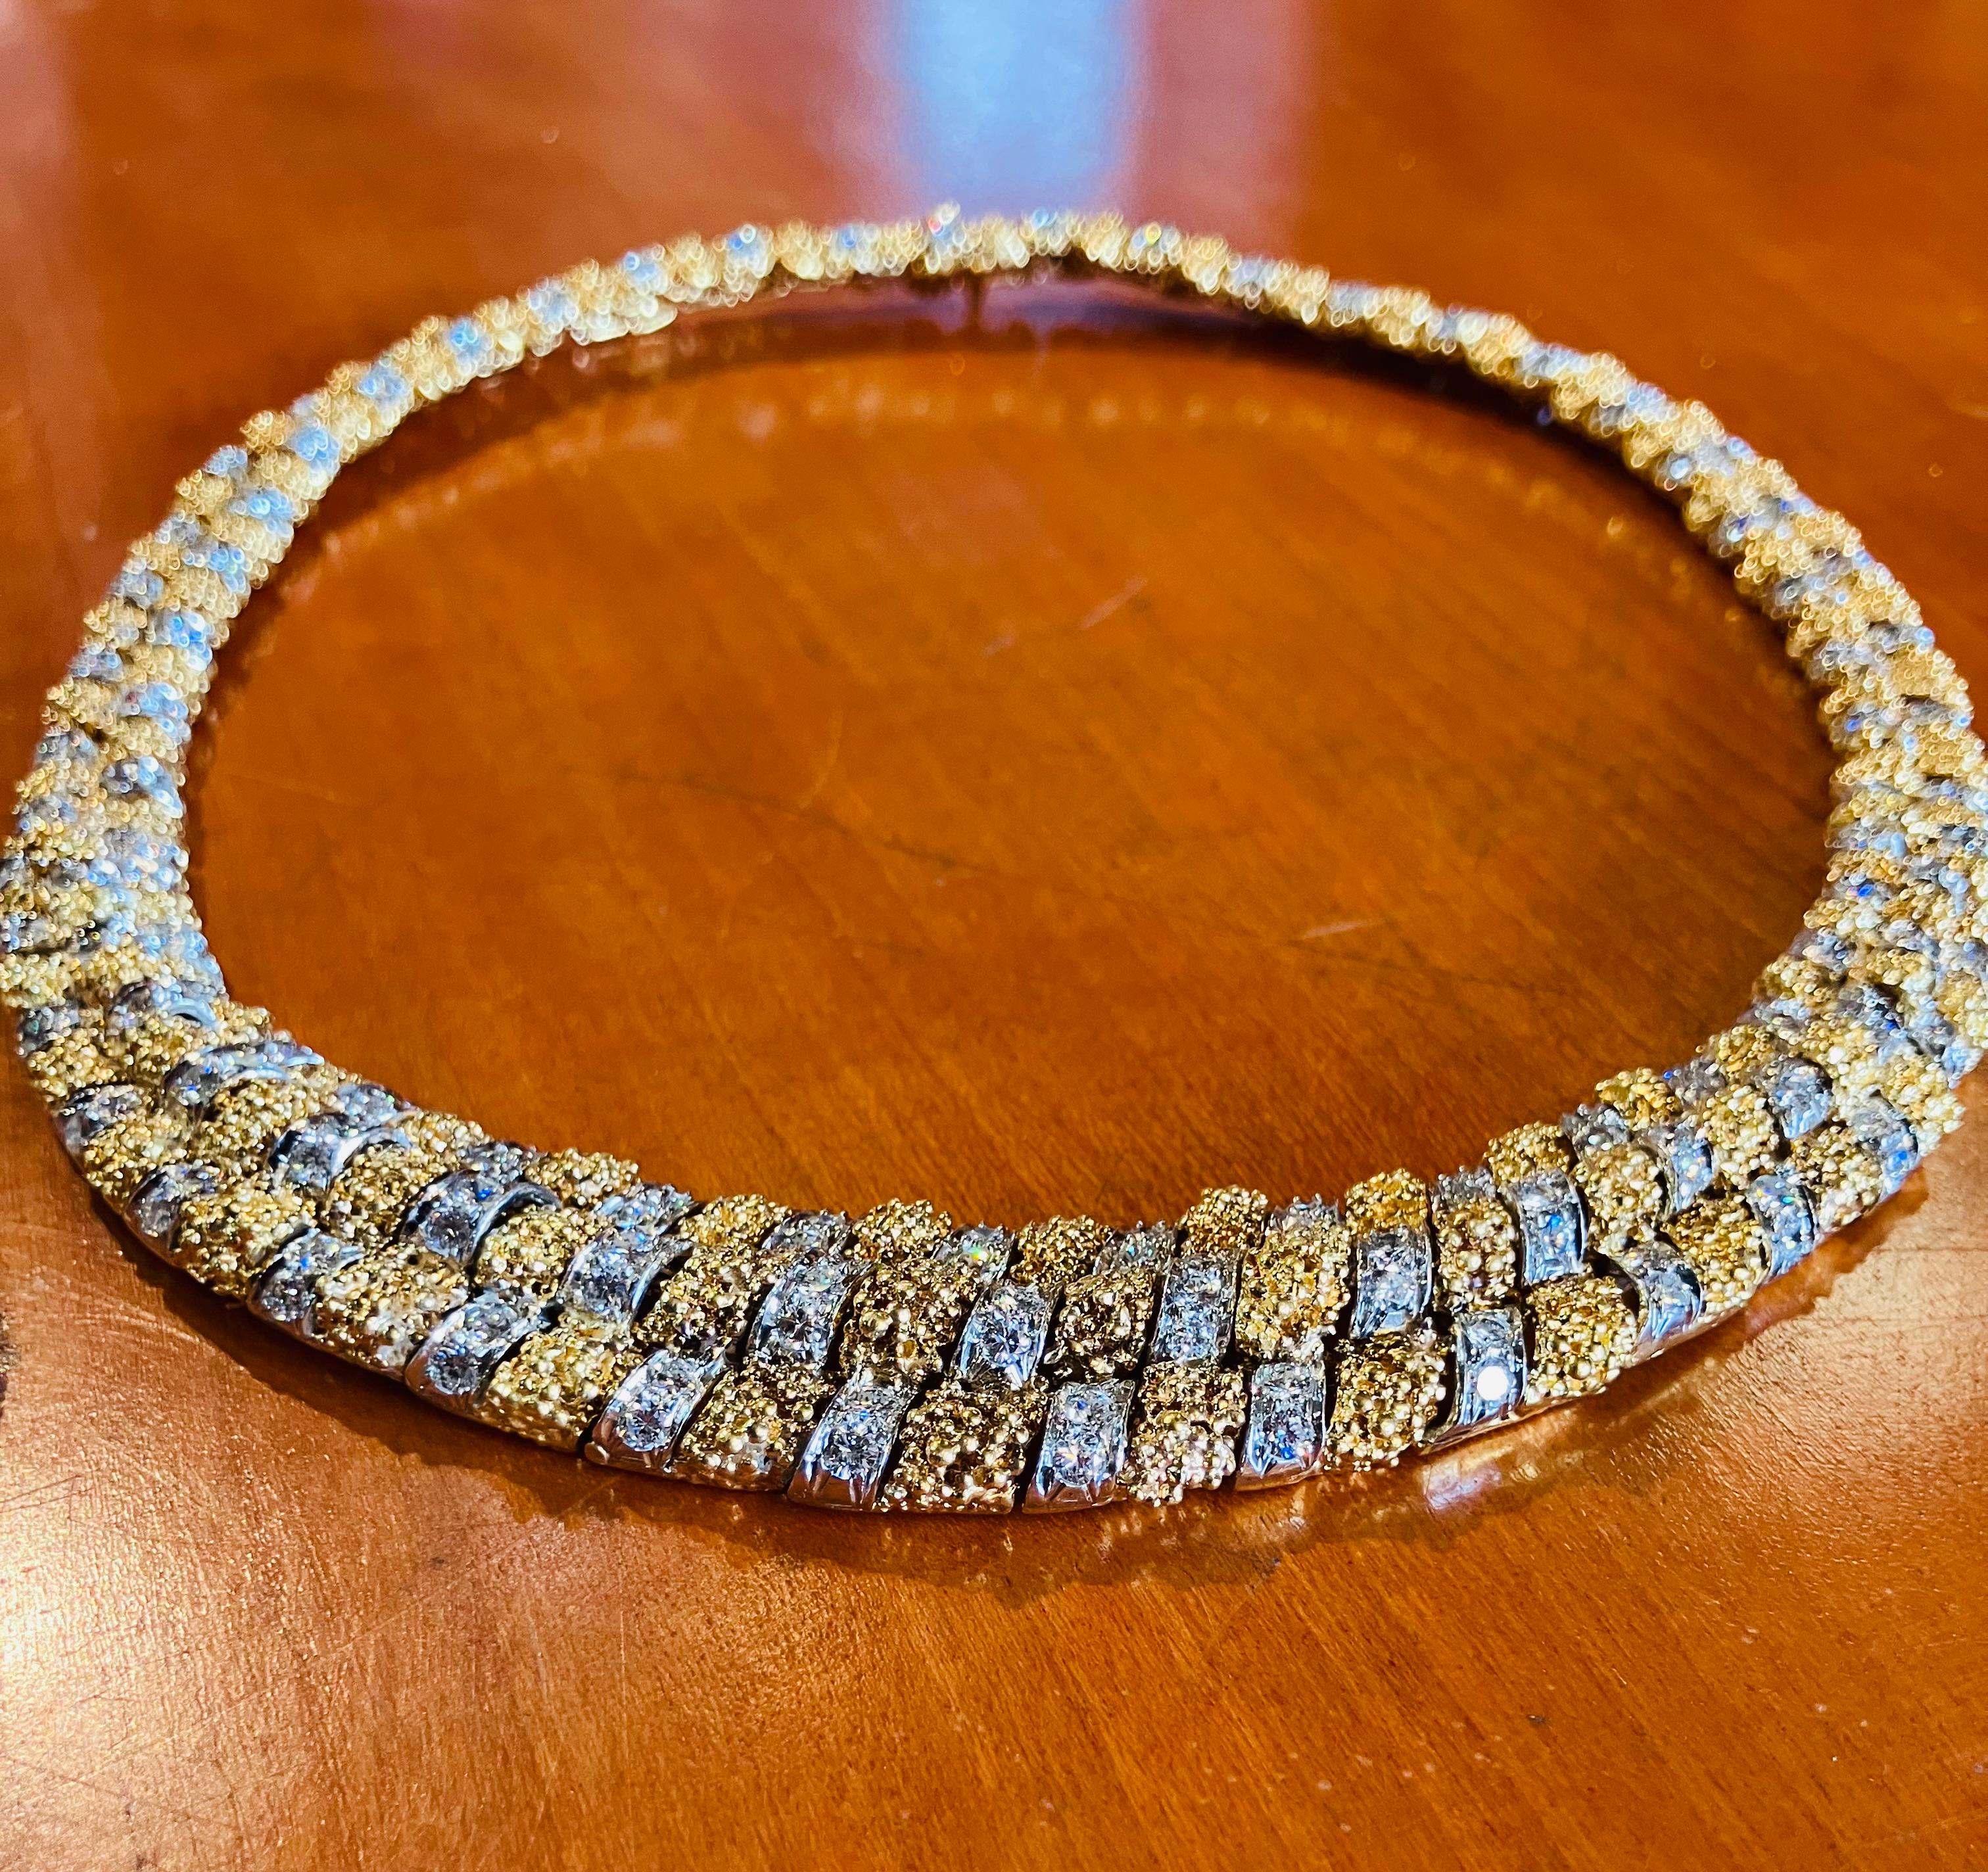 diamond tennis necklace tiffany